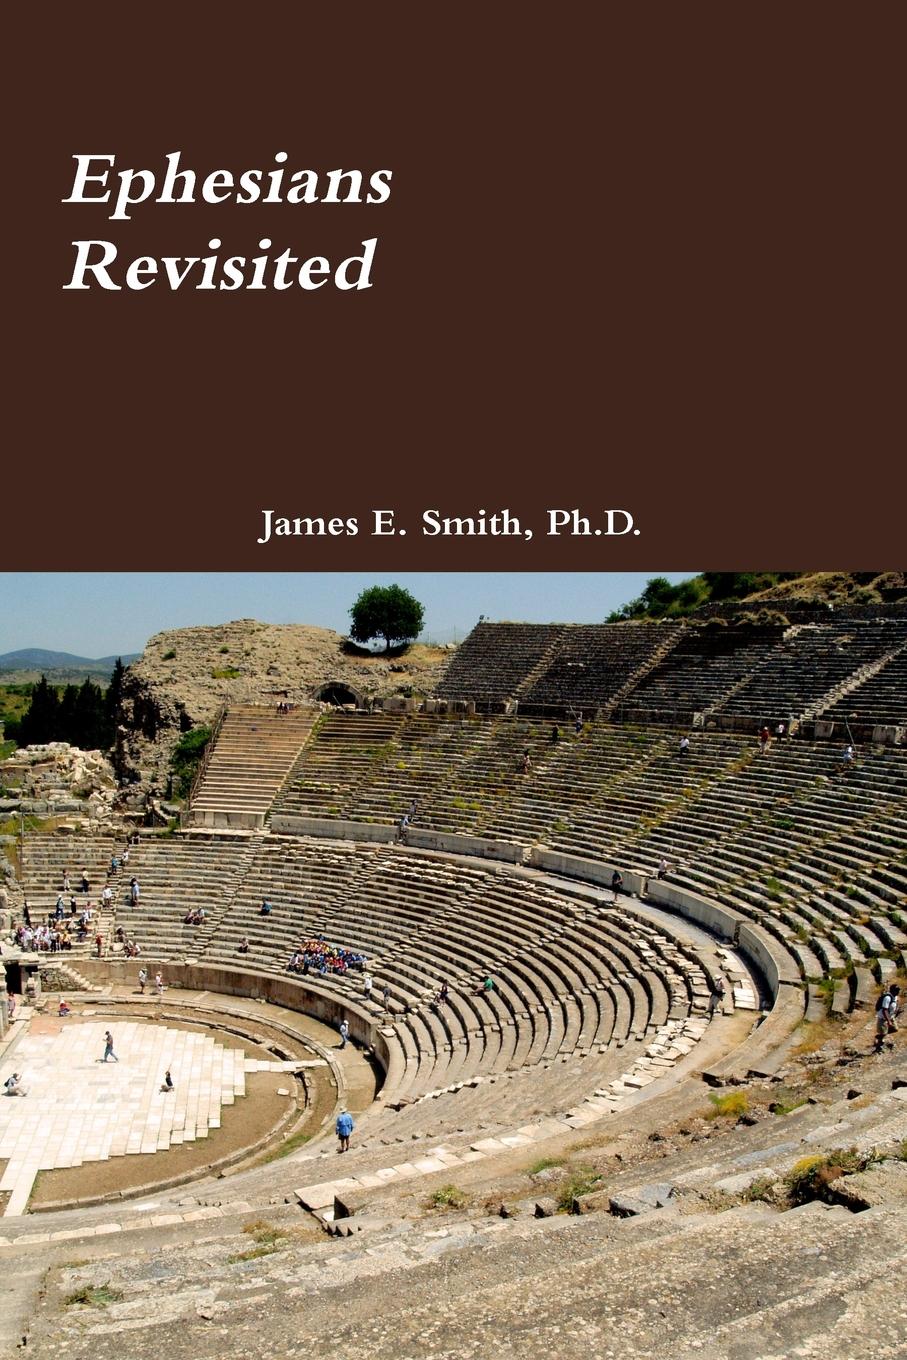 Ph.D. James E. Smith Ephesians Revisited